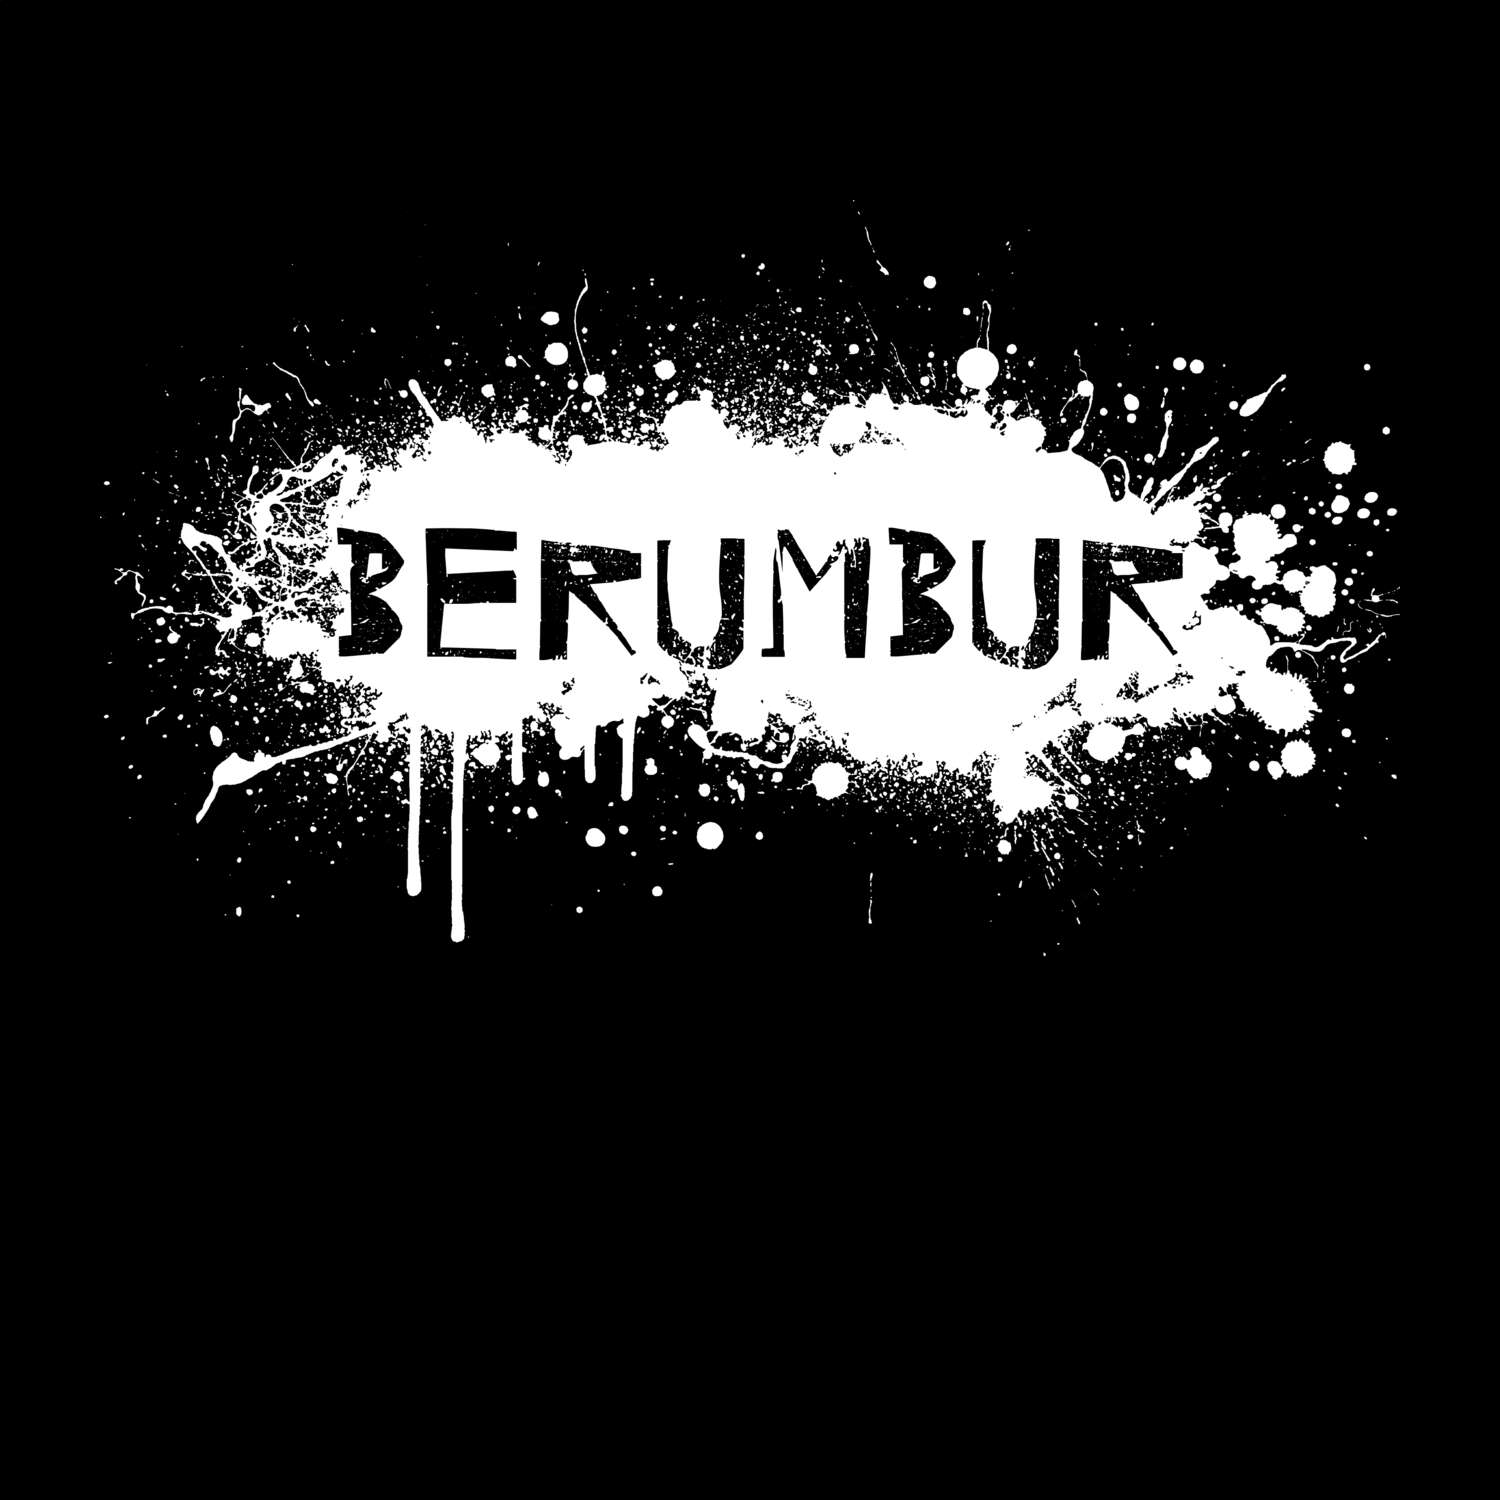 Berumbur T-Shirt »Paint Splash Punk«